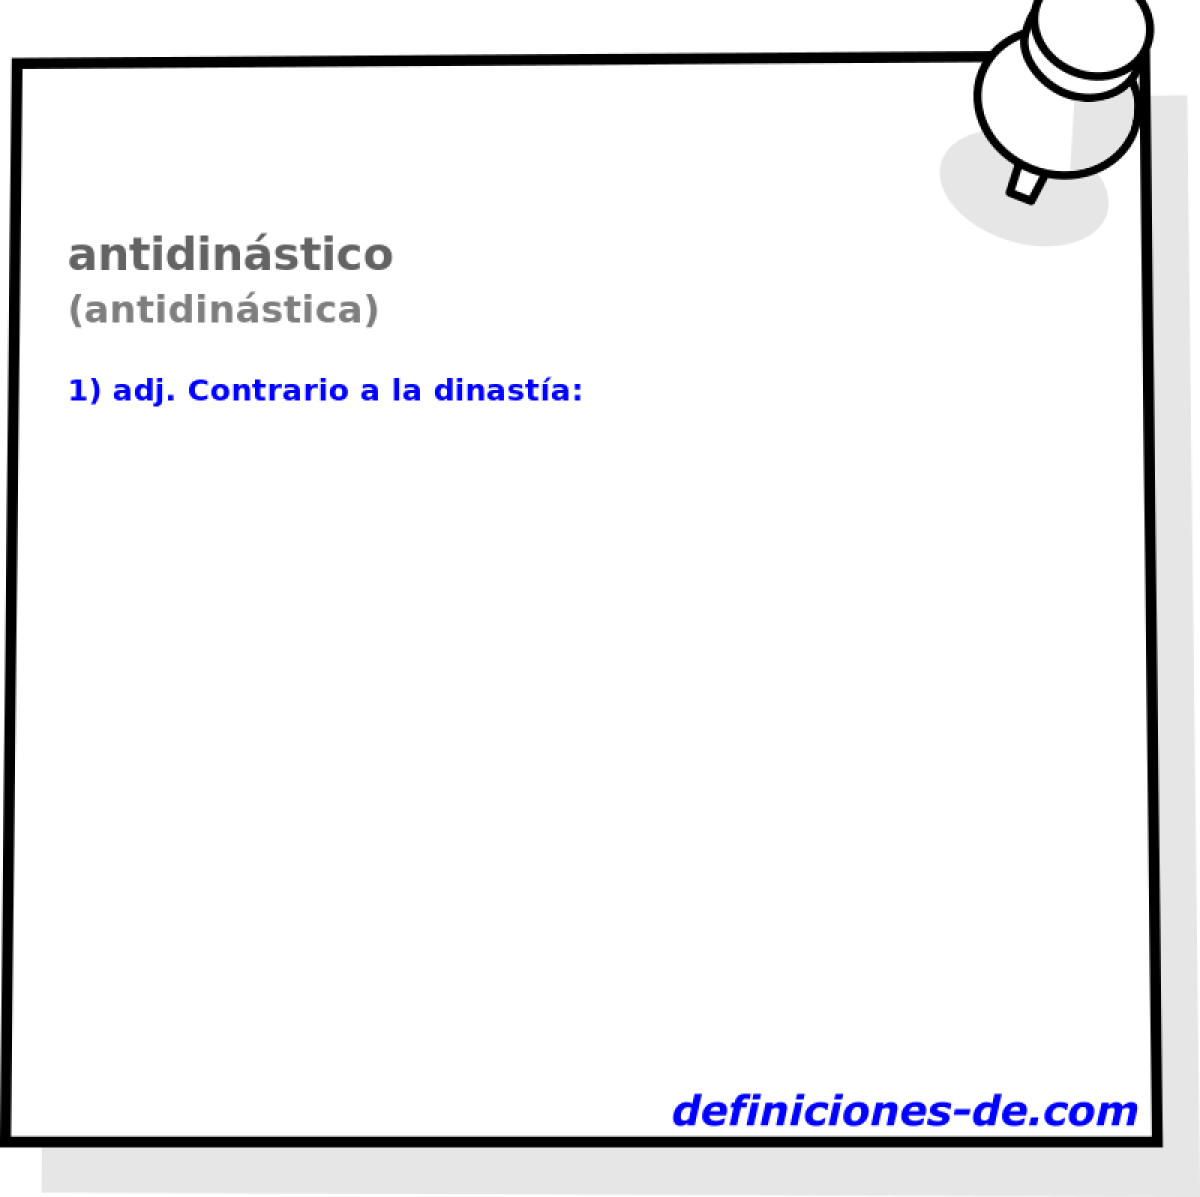 antidinstico (antidinstica)